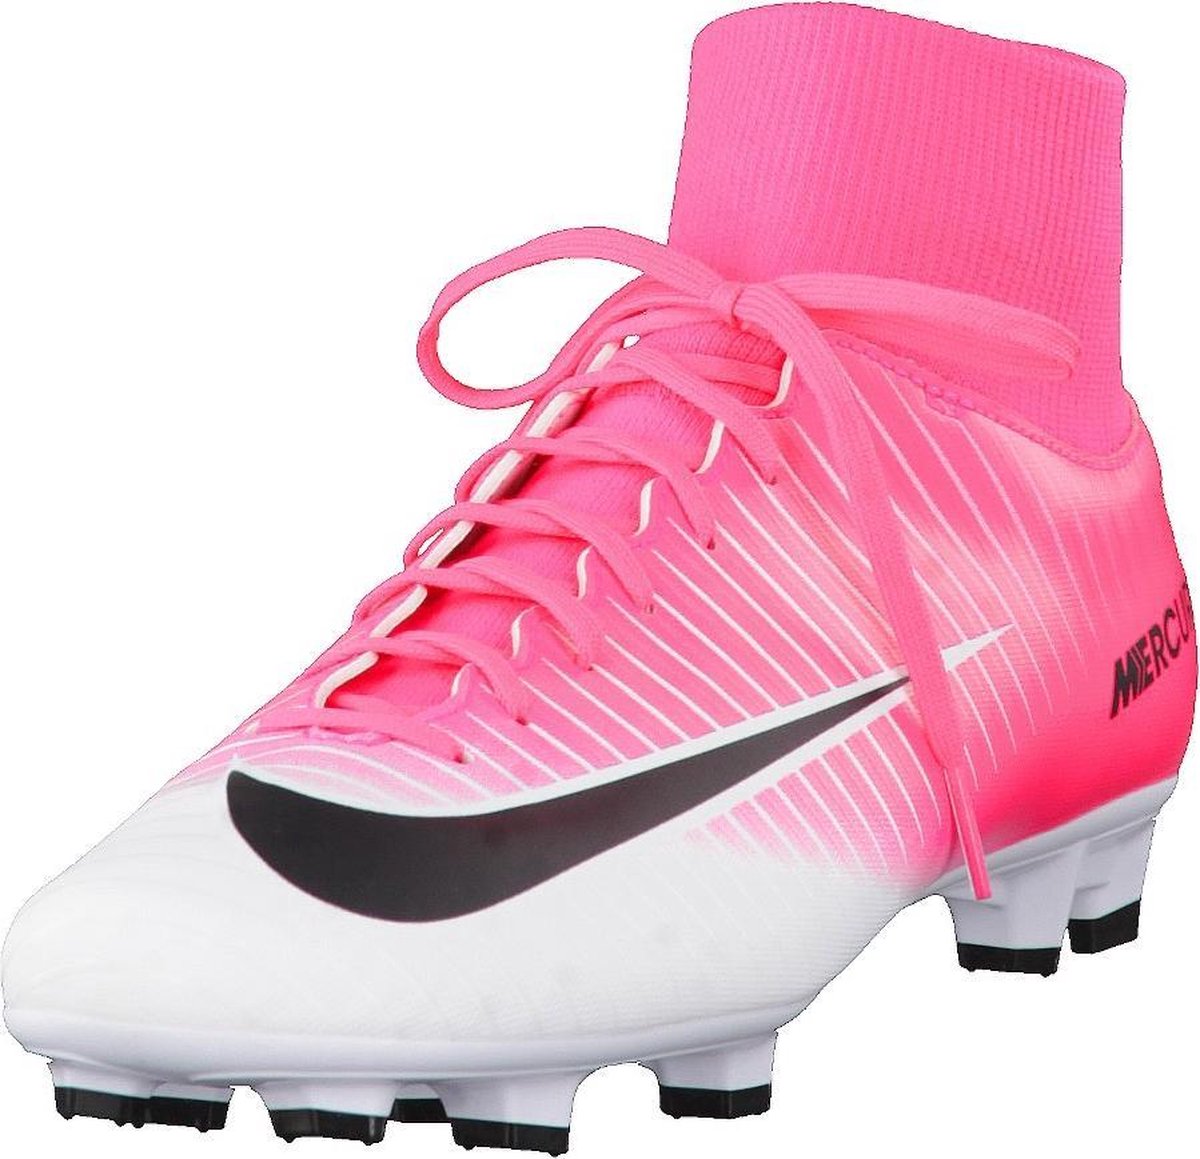 Nike Voetbalschoenen - Maat 45 - Mannen - roze/wit/zwart bol.com